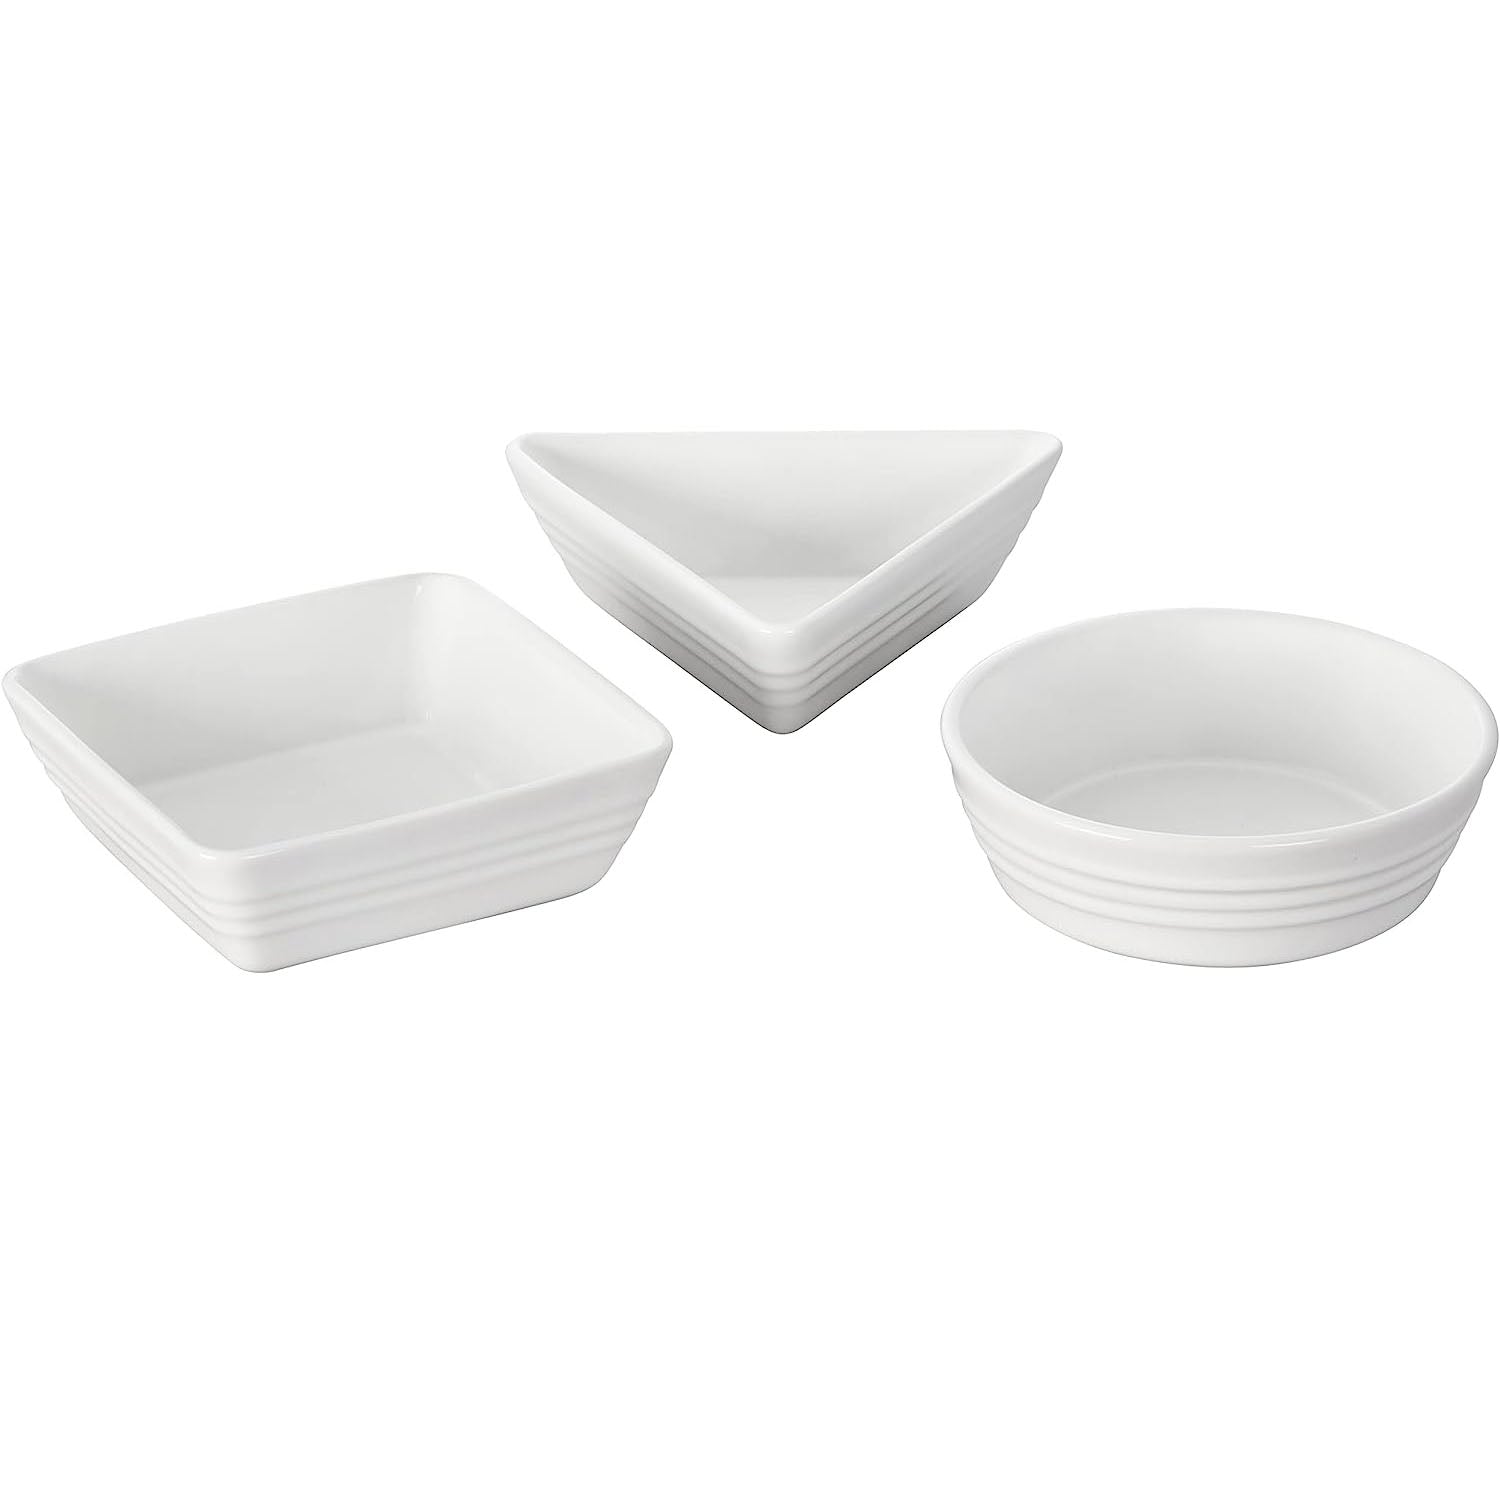 Le Creuset Heritage Set of 3 Rectangular Dishes - White